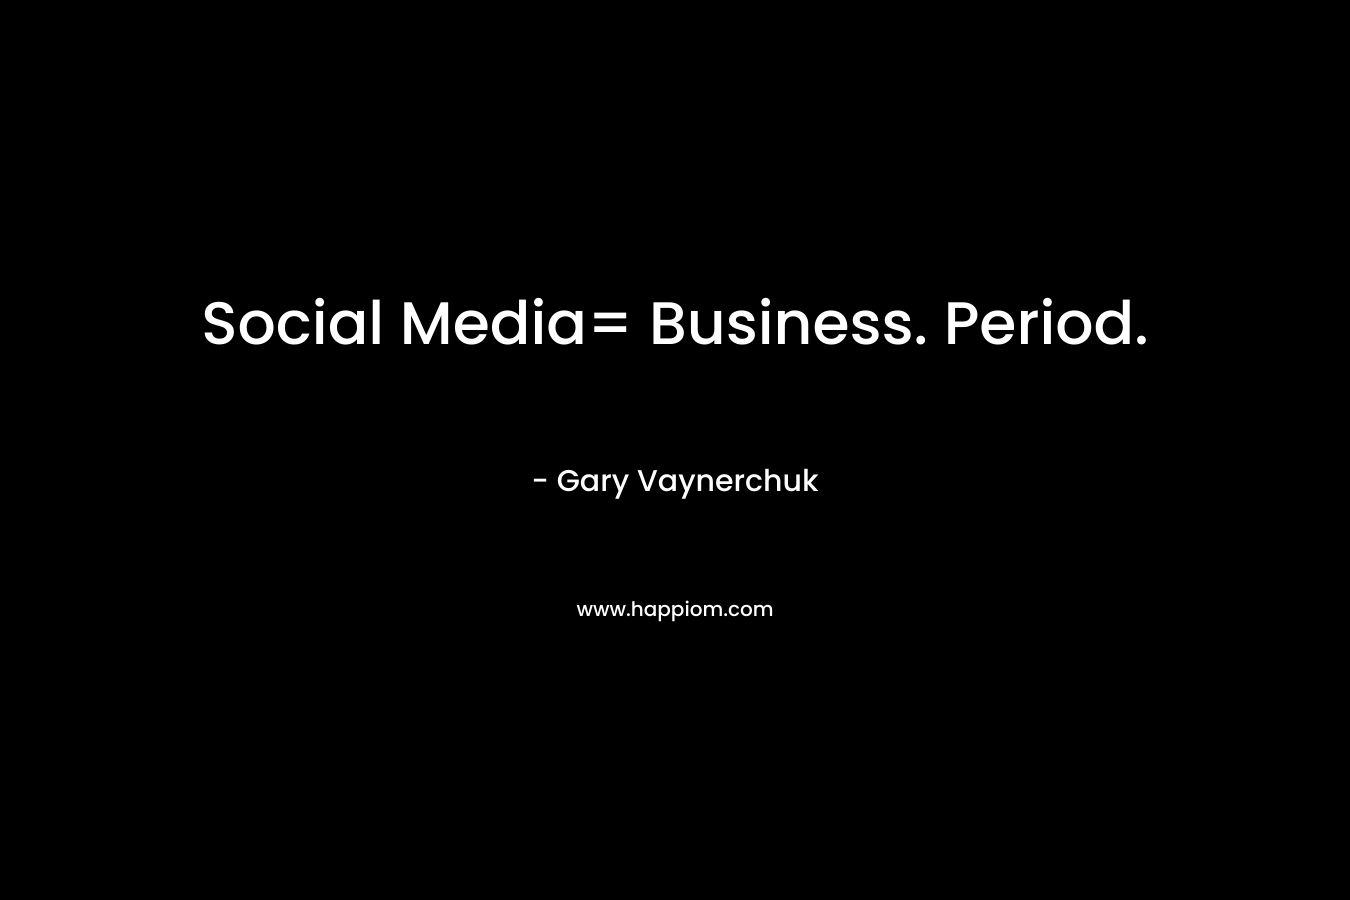 Social Media= Business. Period.